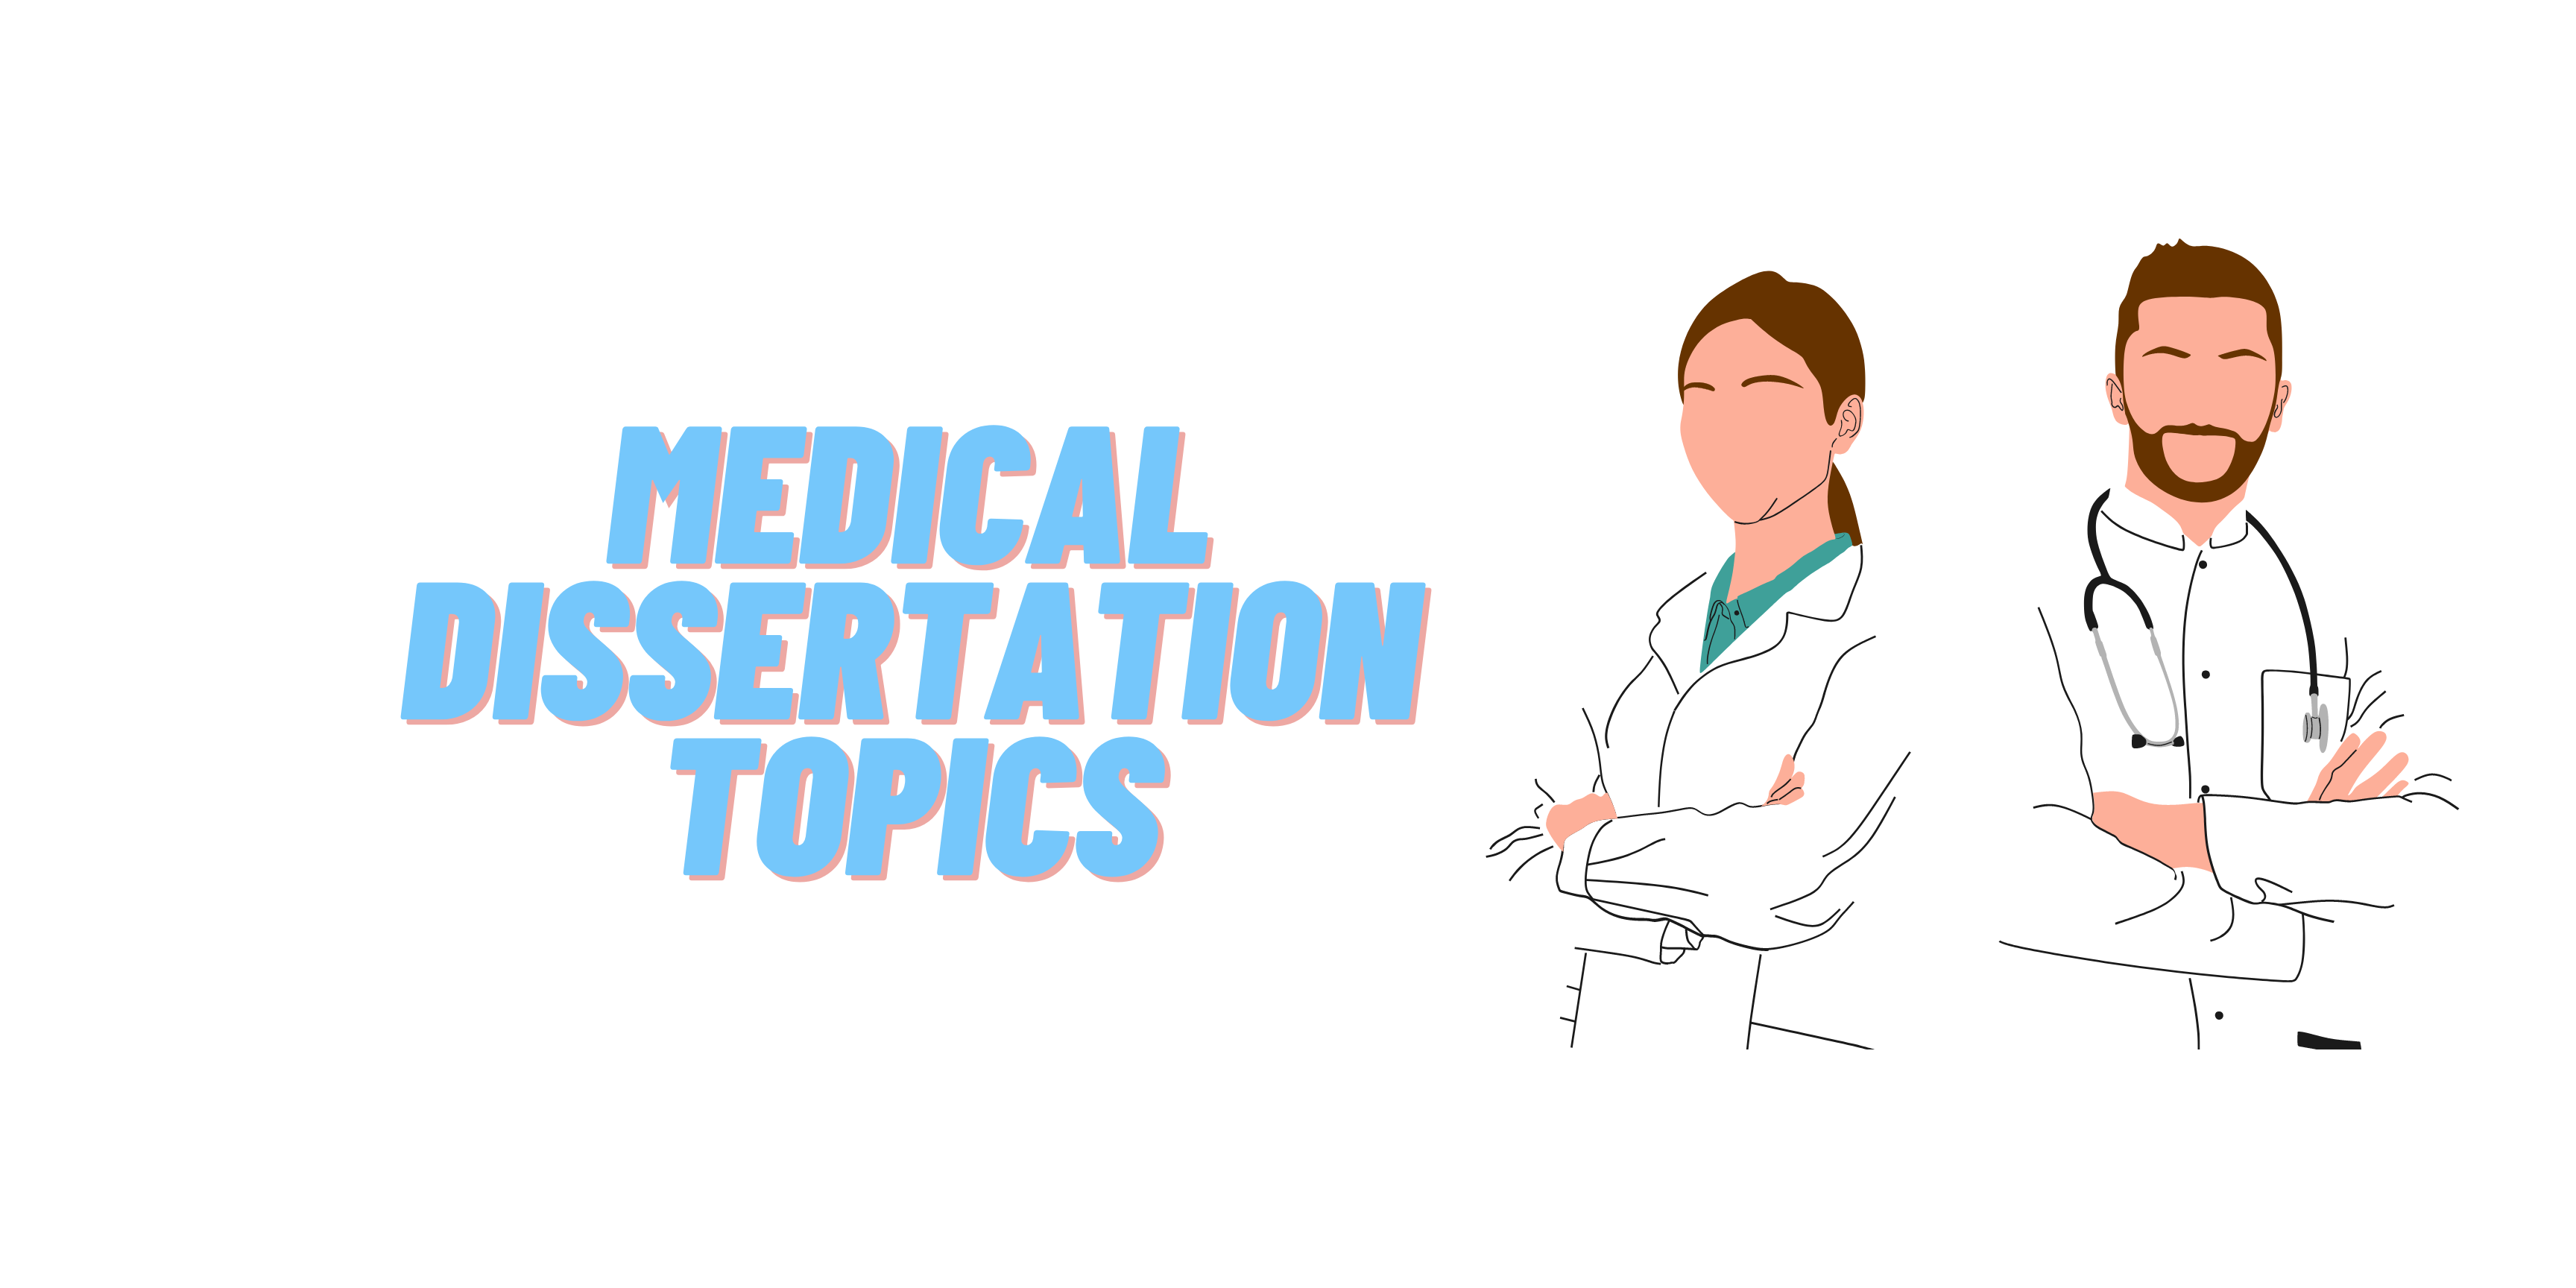 medical education dissertation topics